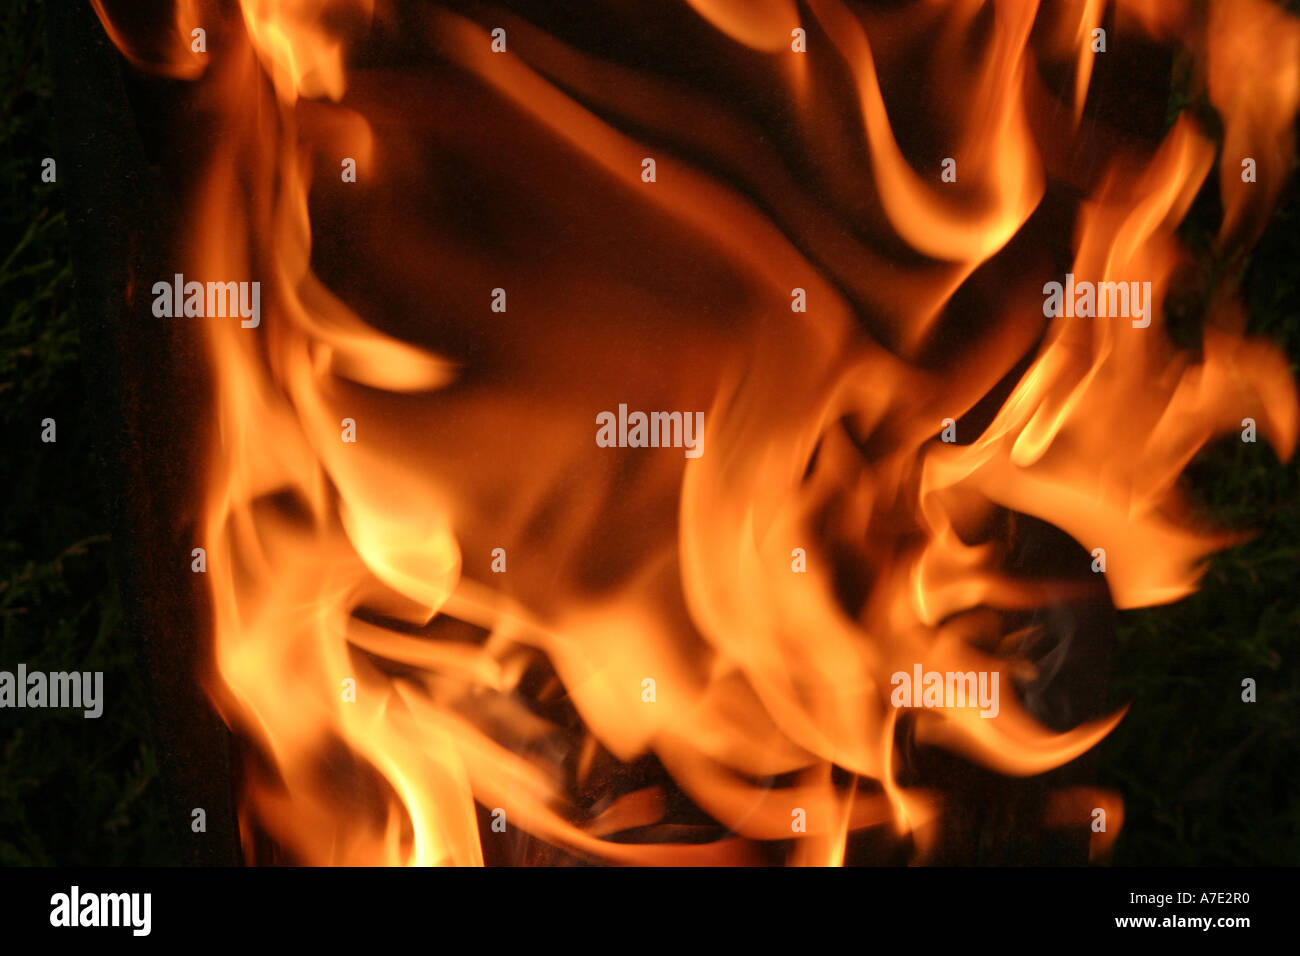 Orange Flames against a black background Stock Photo